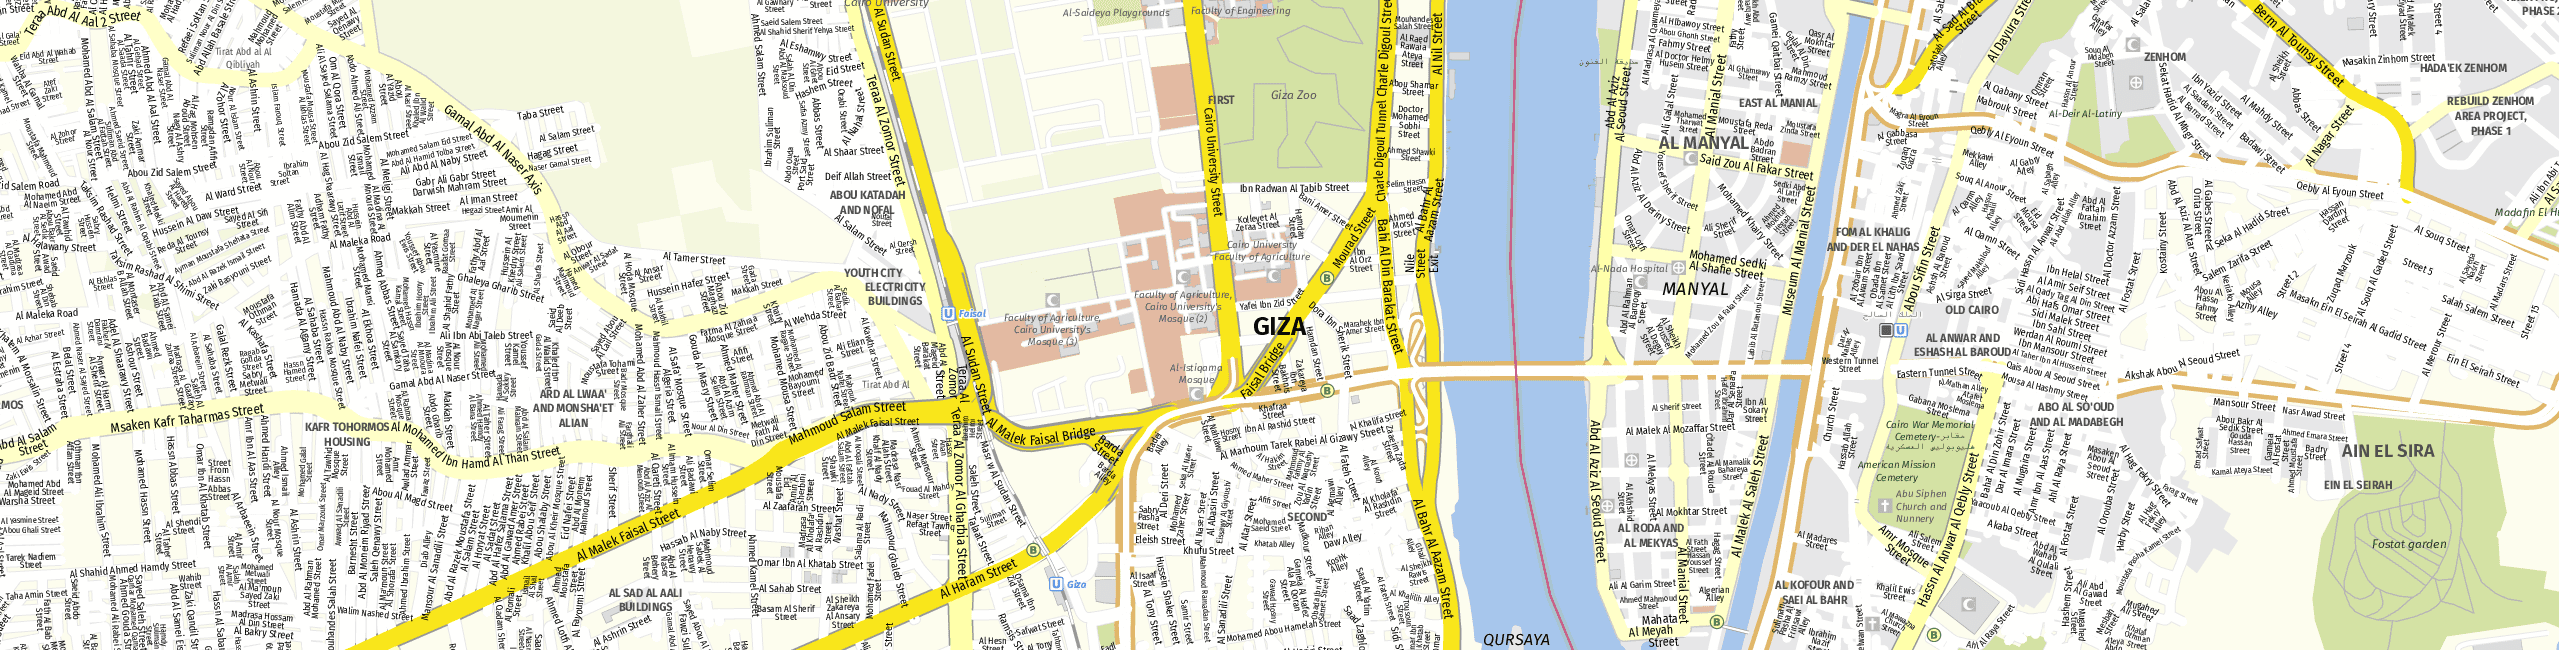 Stadtplan Giza zum Downloaden.